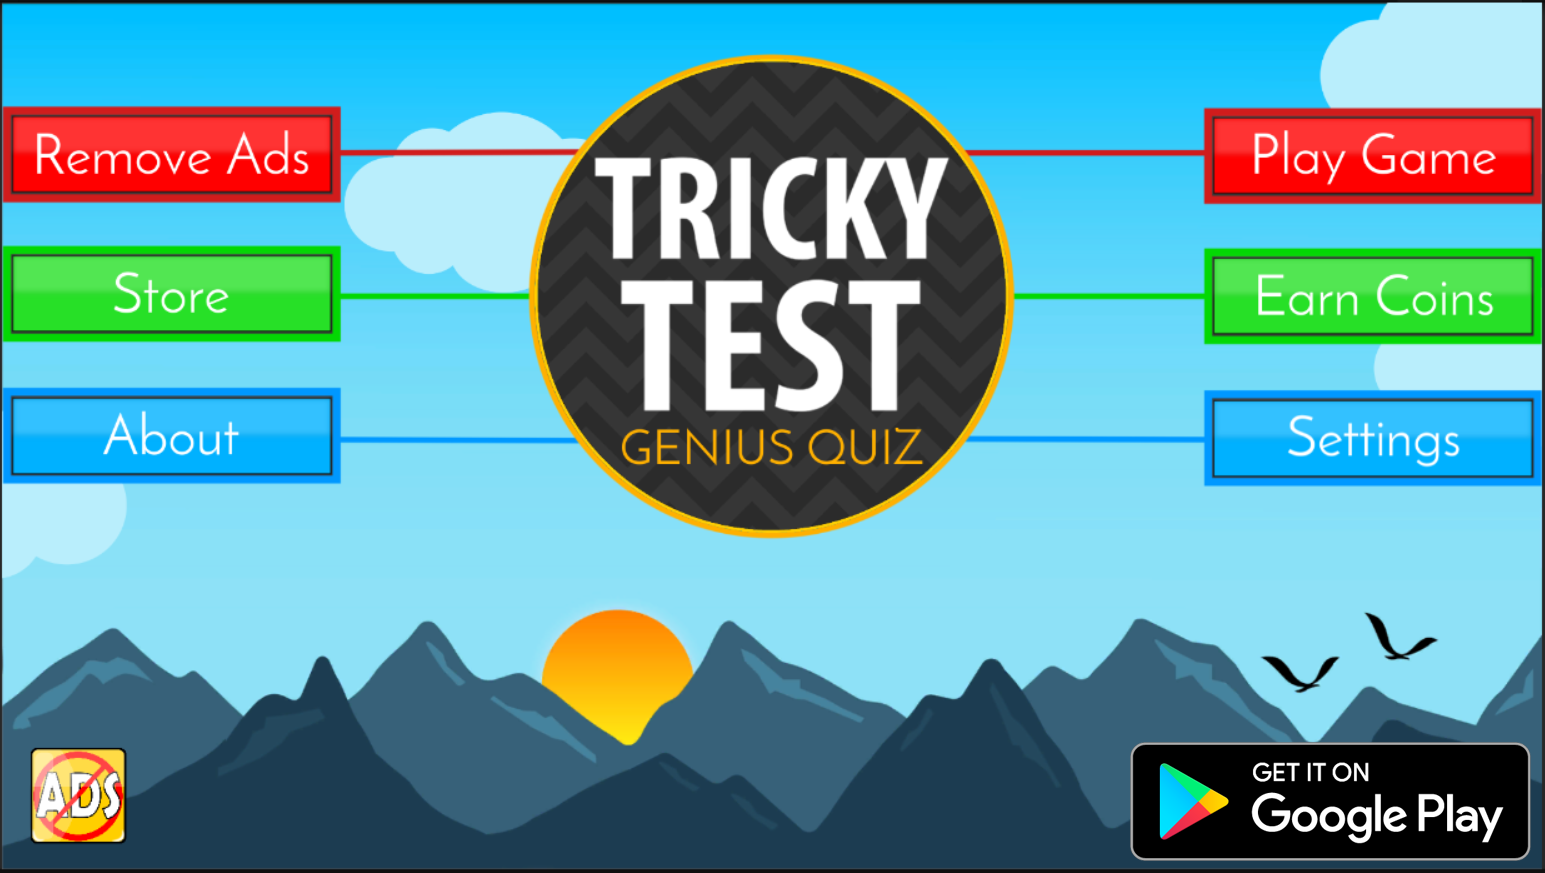 The Genius Quiz : Tricky Test - IQ